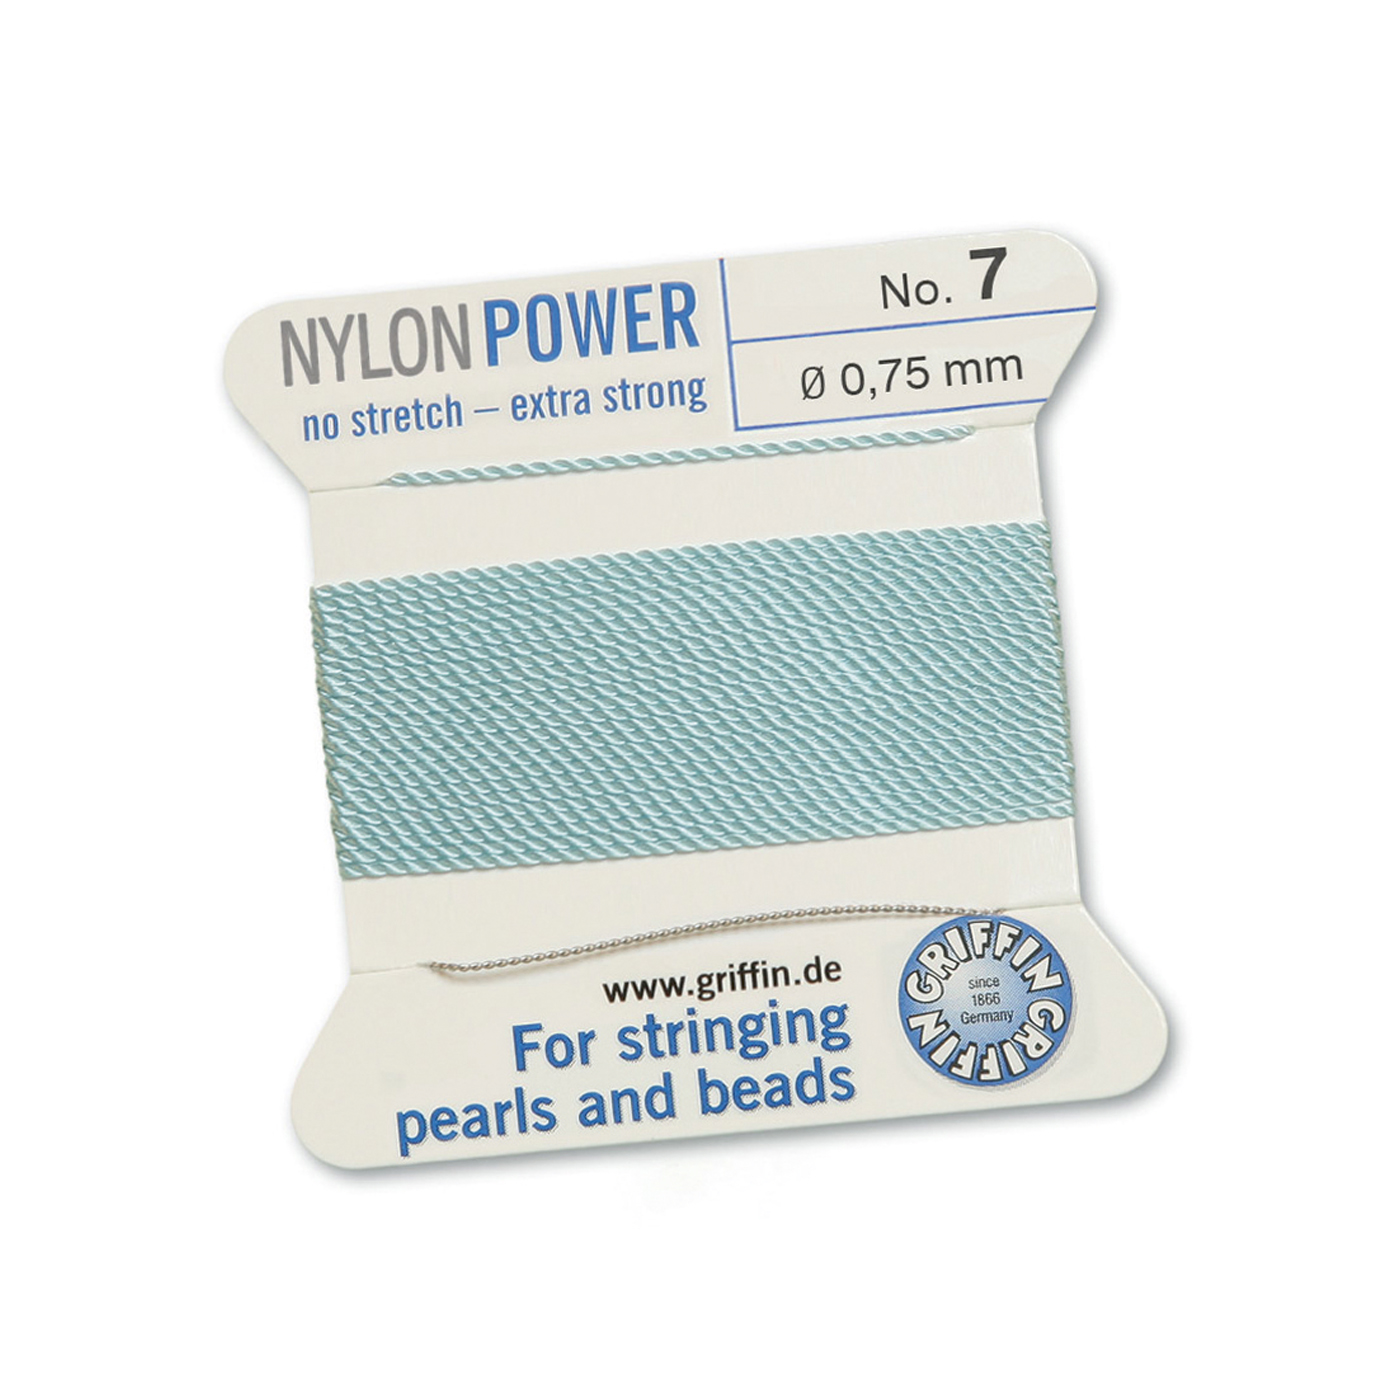 Bead Cord NylonPower, Turquoise, No. 7 - 2 m